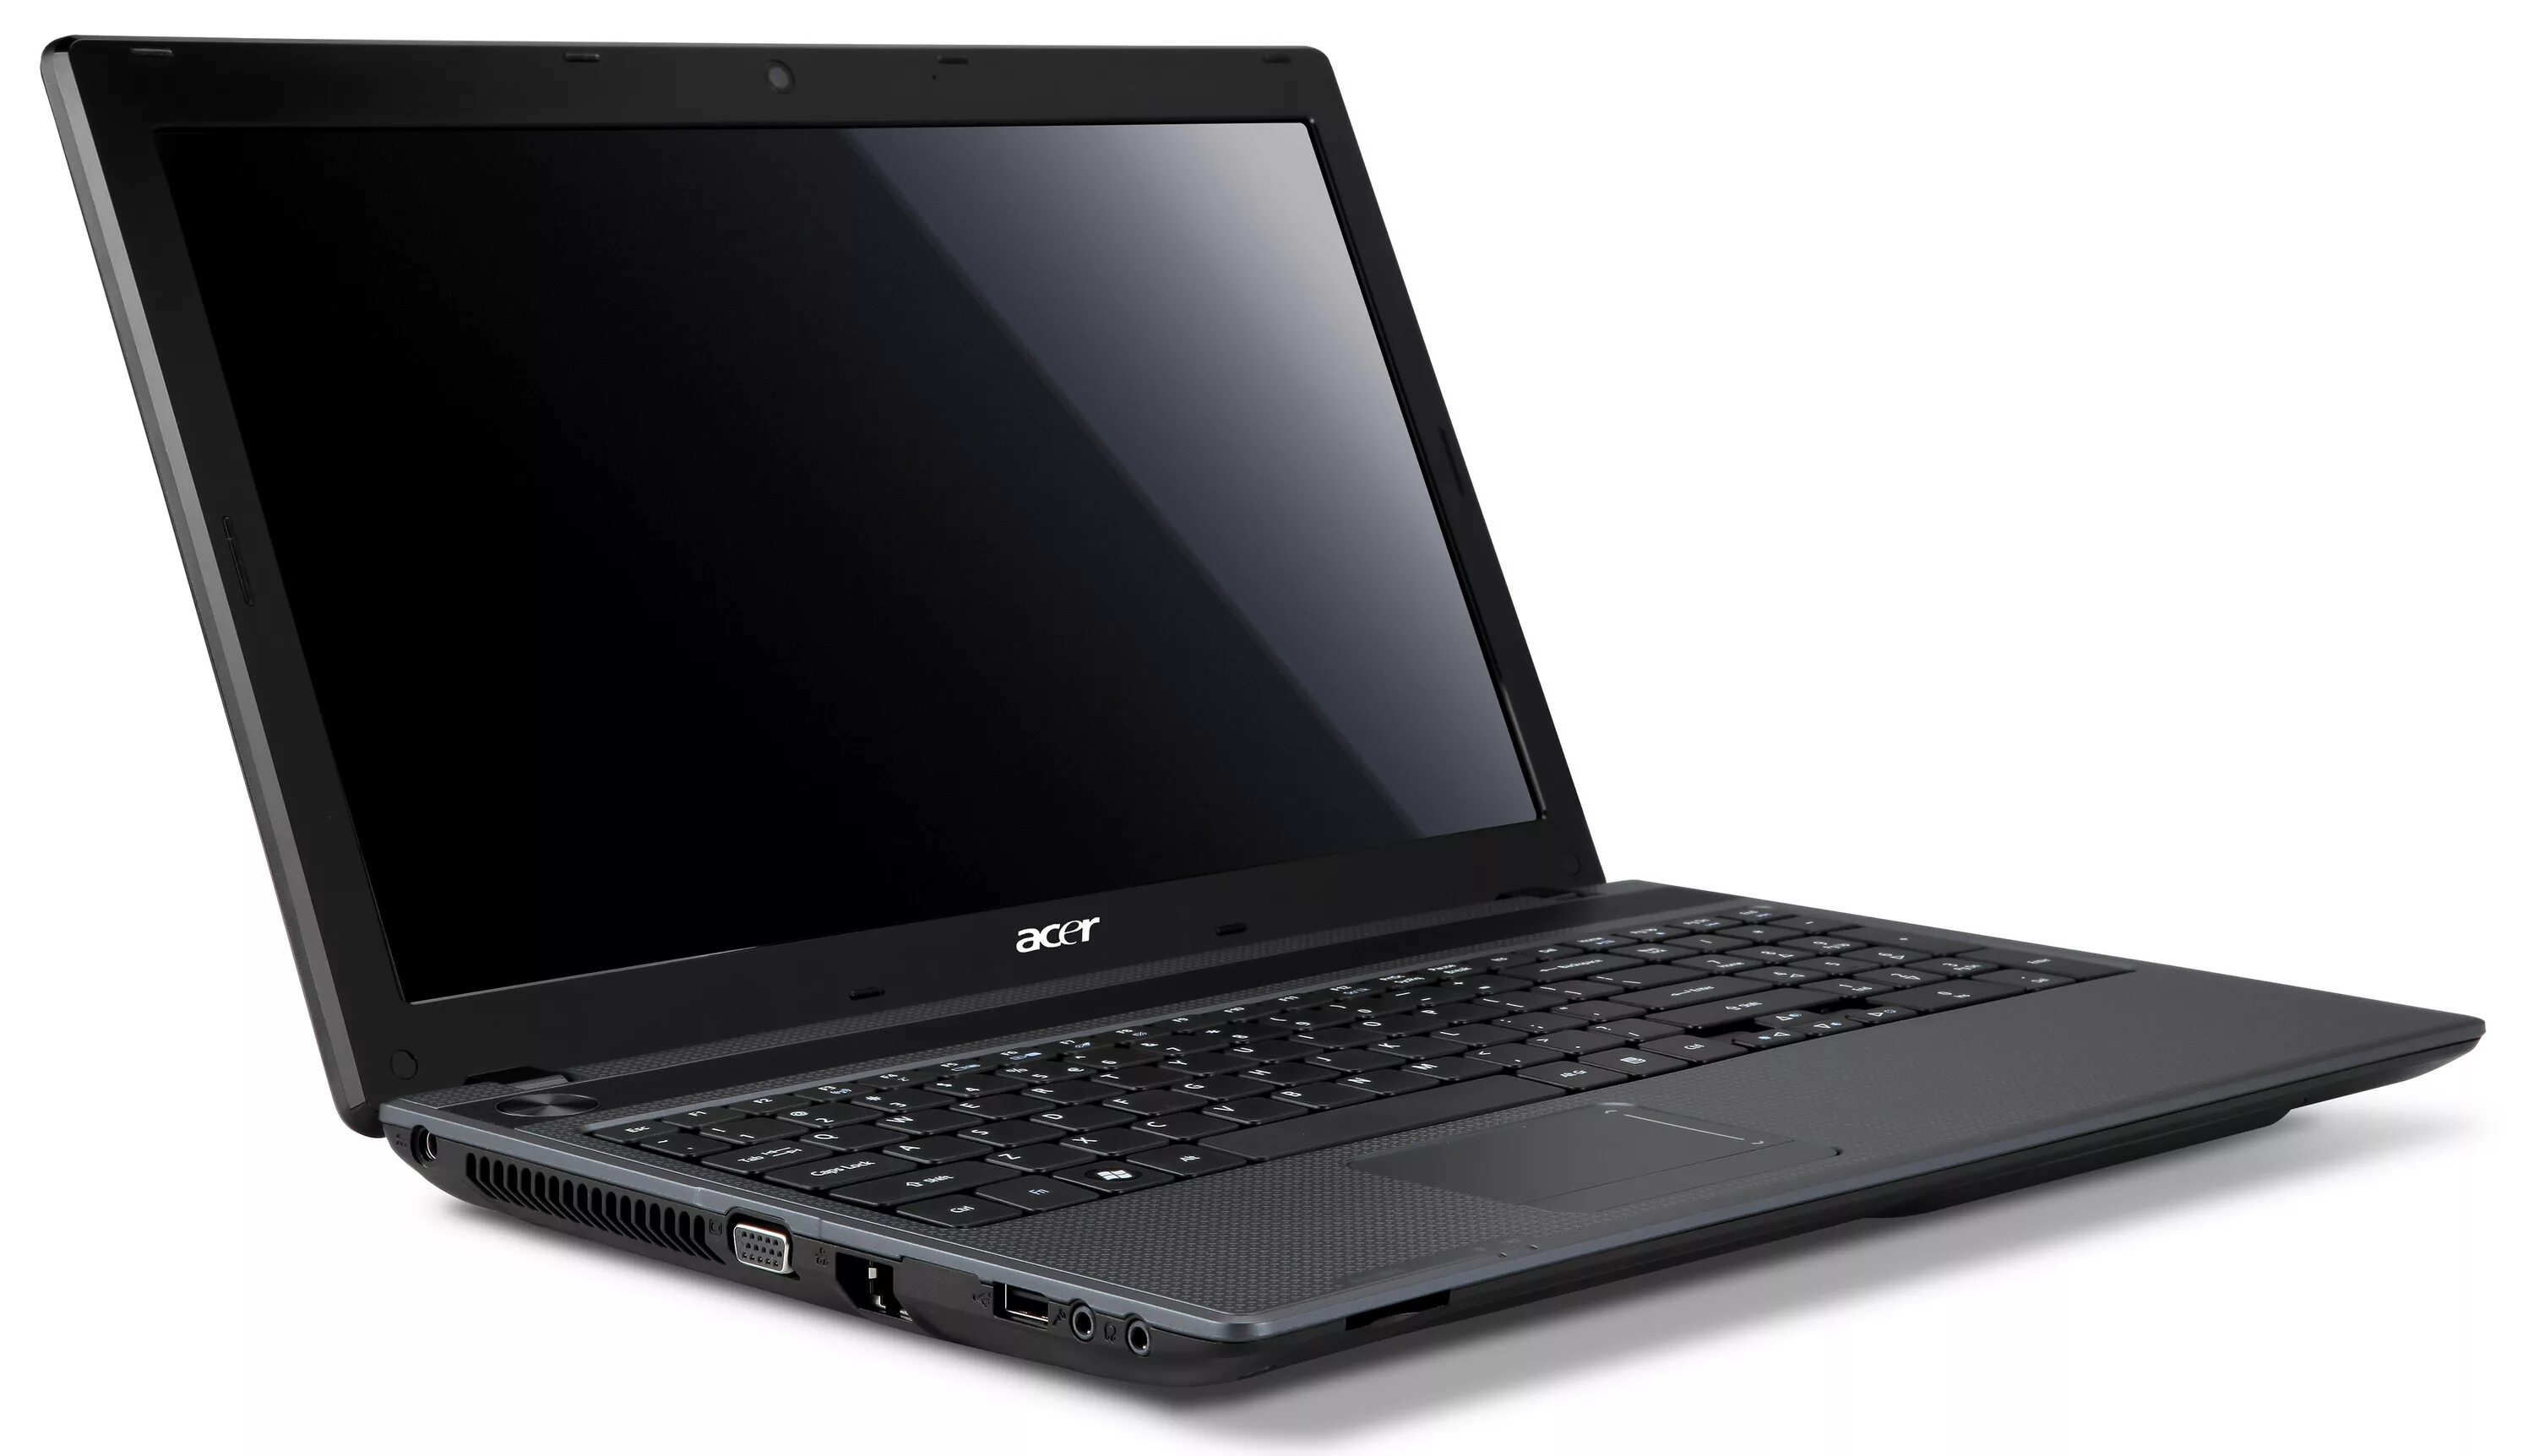 Acer Aspire 5733 pew71. Ноутбук Acer Aspire 5733z-p622g32mikk. Acer Aspire 5733z-p623g32mikk. Aspire 5733z-p623g32mikk.